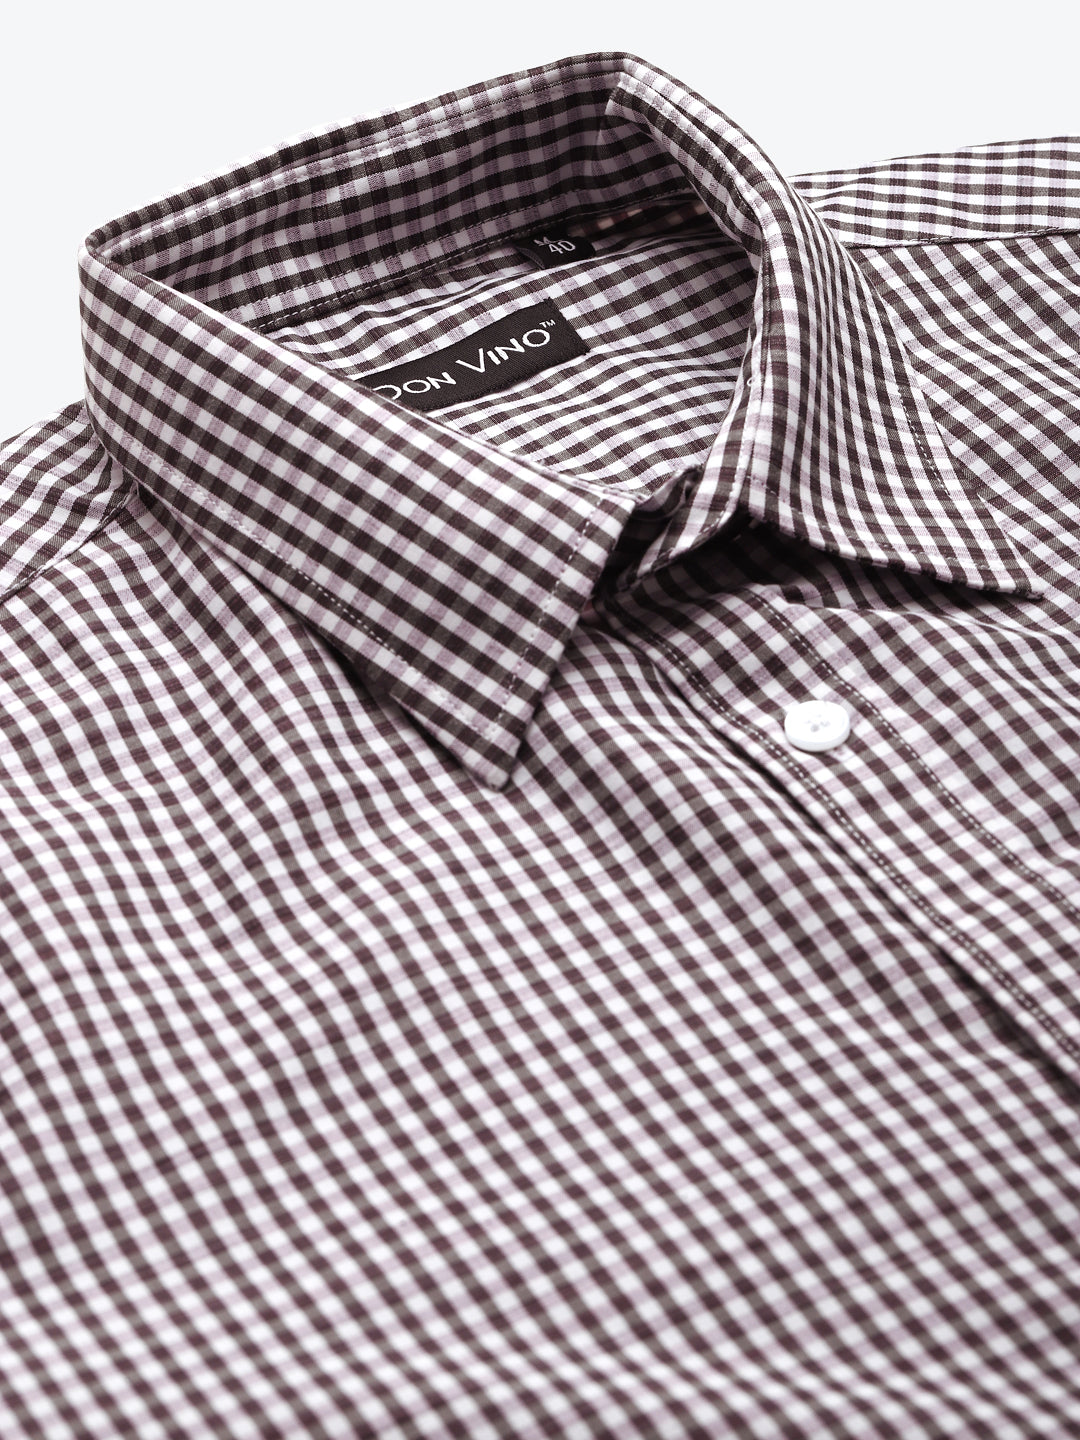 Don Vino Men's Small Checks Formal Shirt